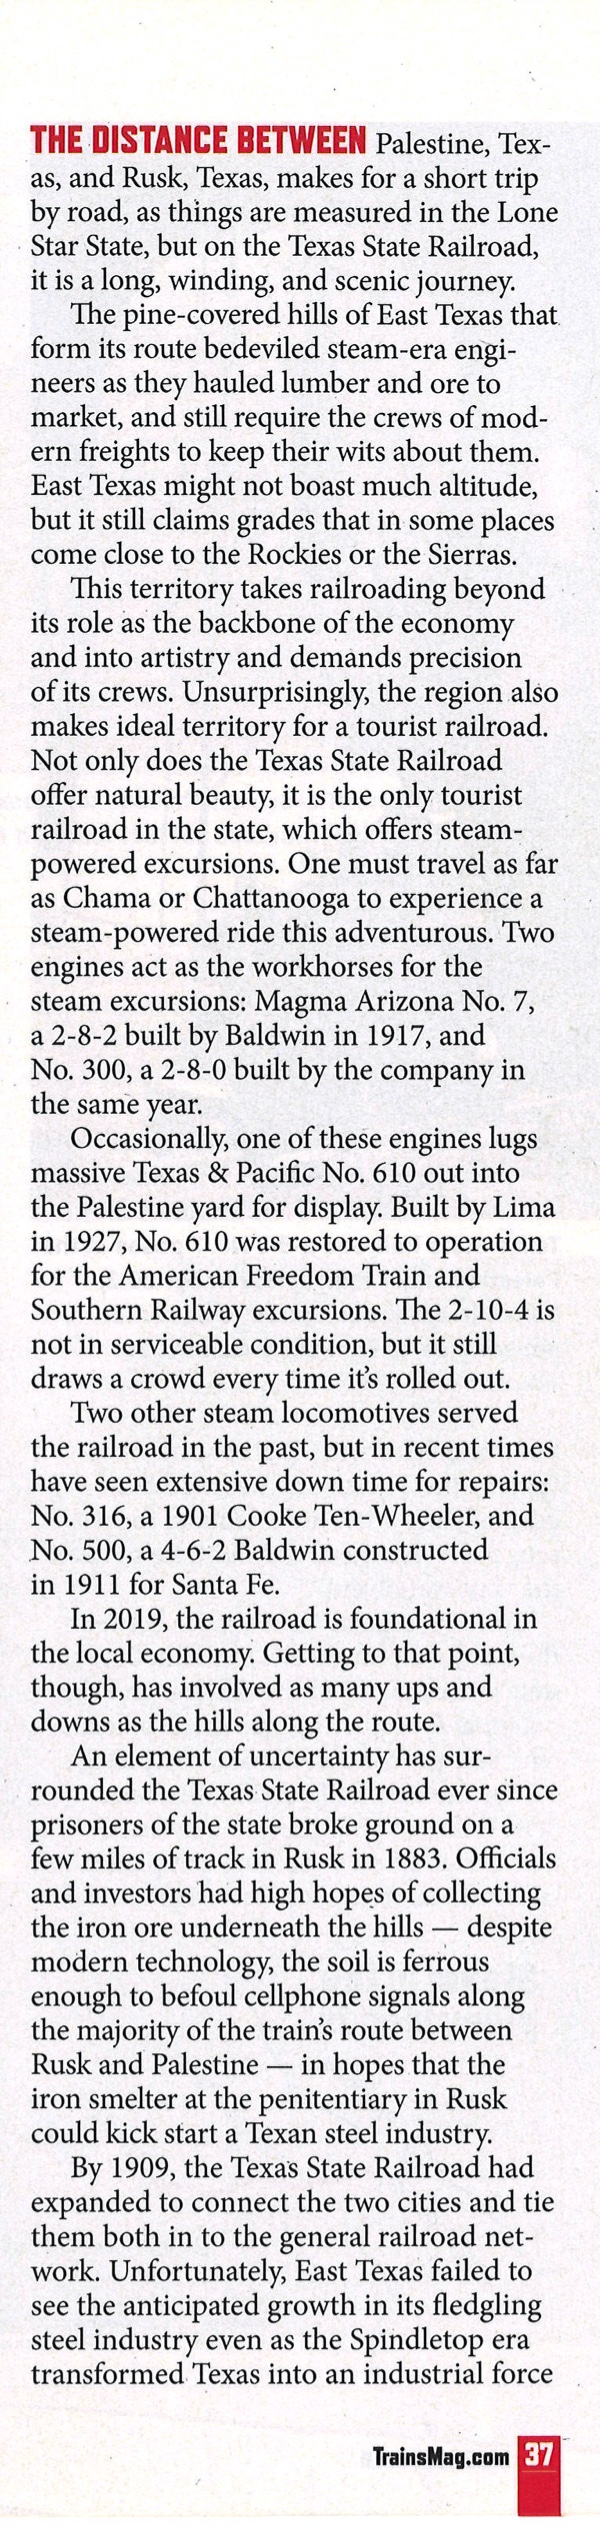 HawkinsRails - Texas State Railroad Publications